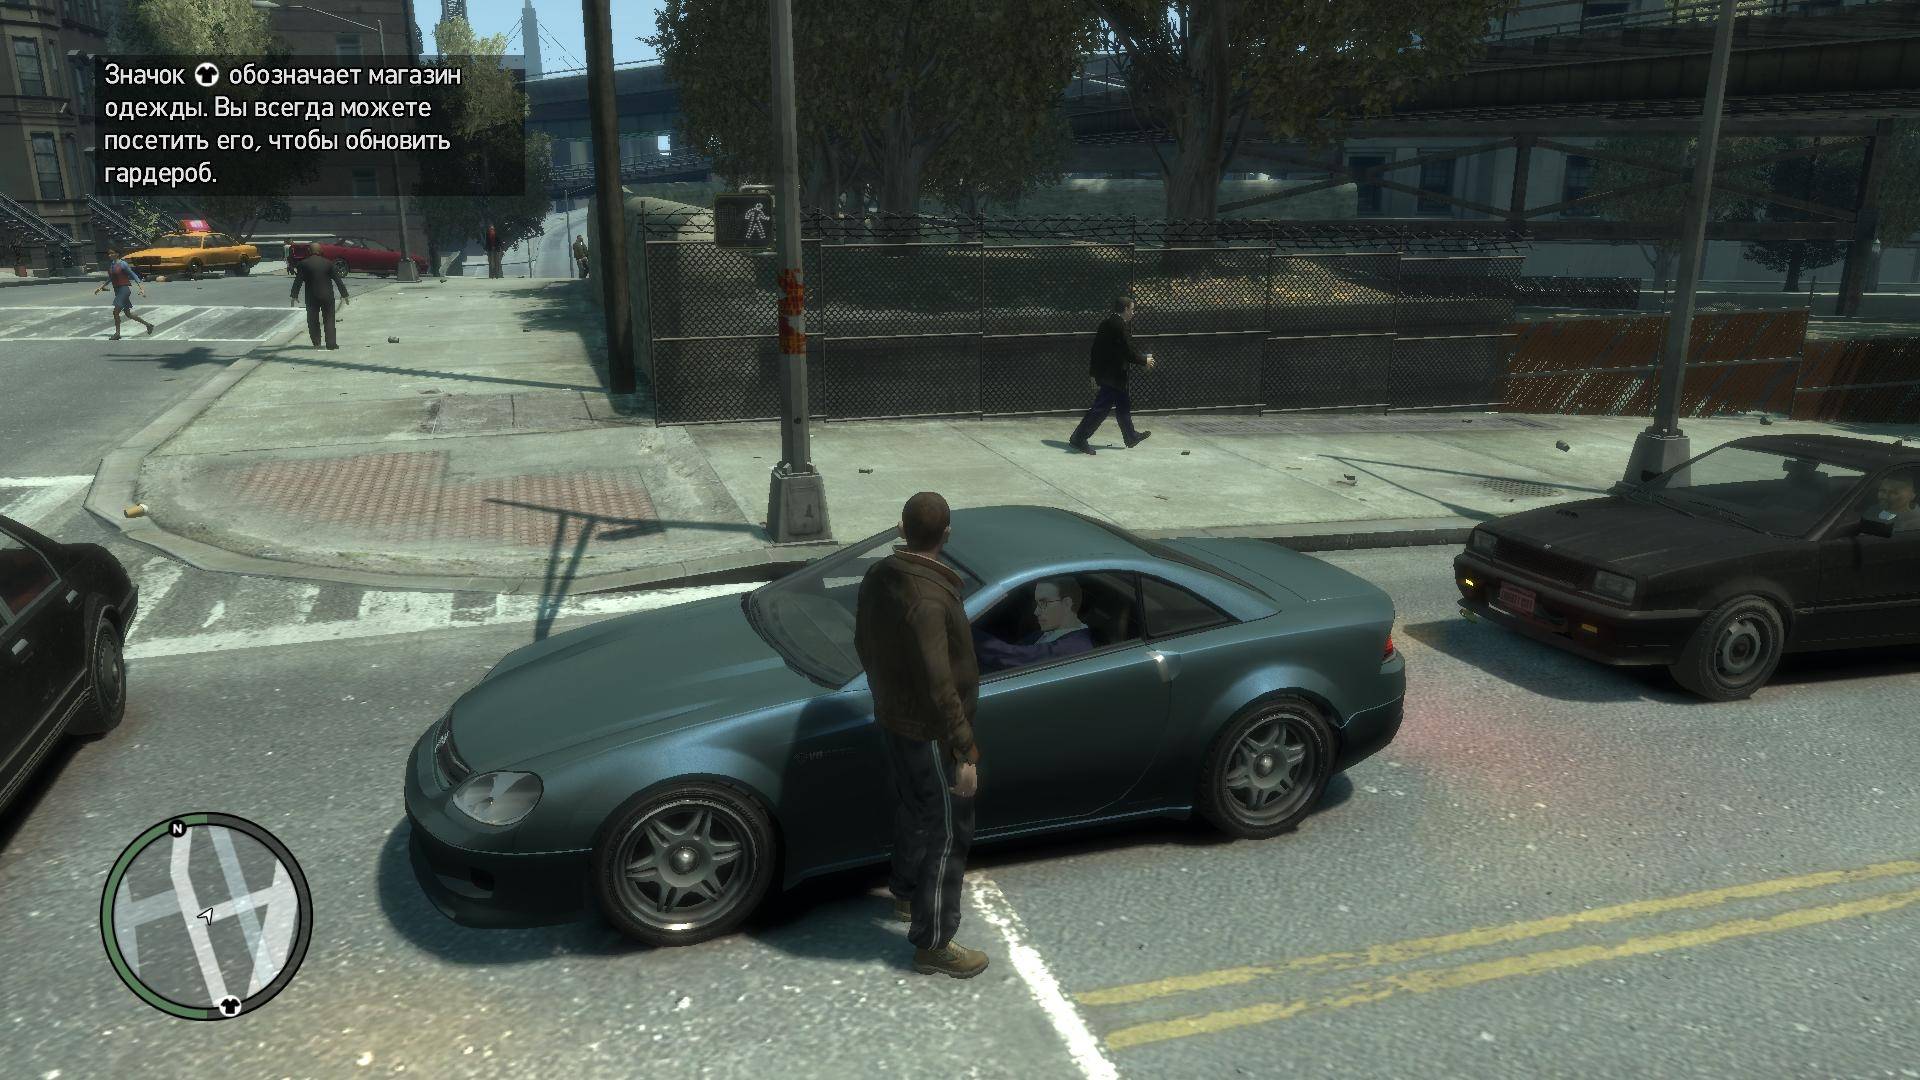 Gta 4 fail. GTA IV 2008. GTA Grand Theft auto 4. GTA 4 Episodes from Liberty City. Grand Theft auto IV. Complete Edition.